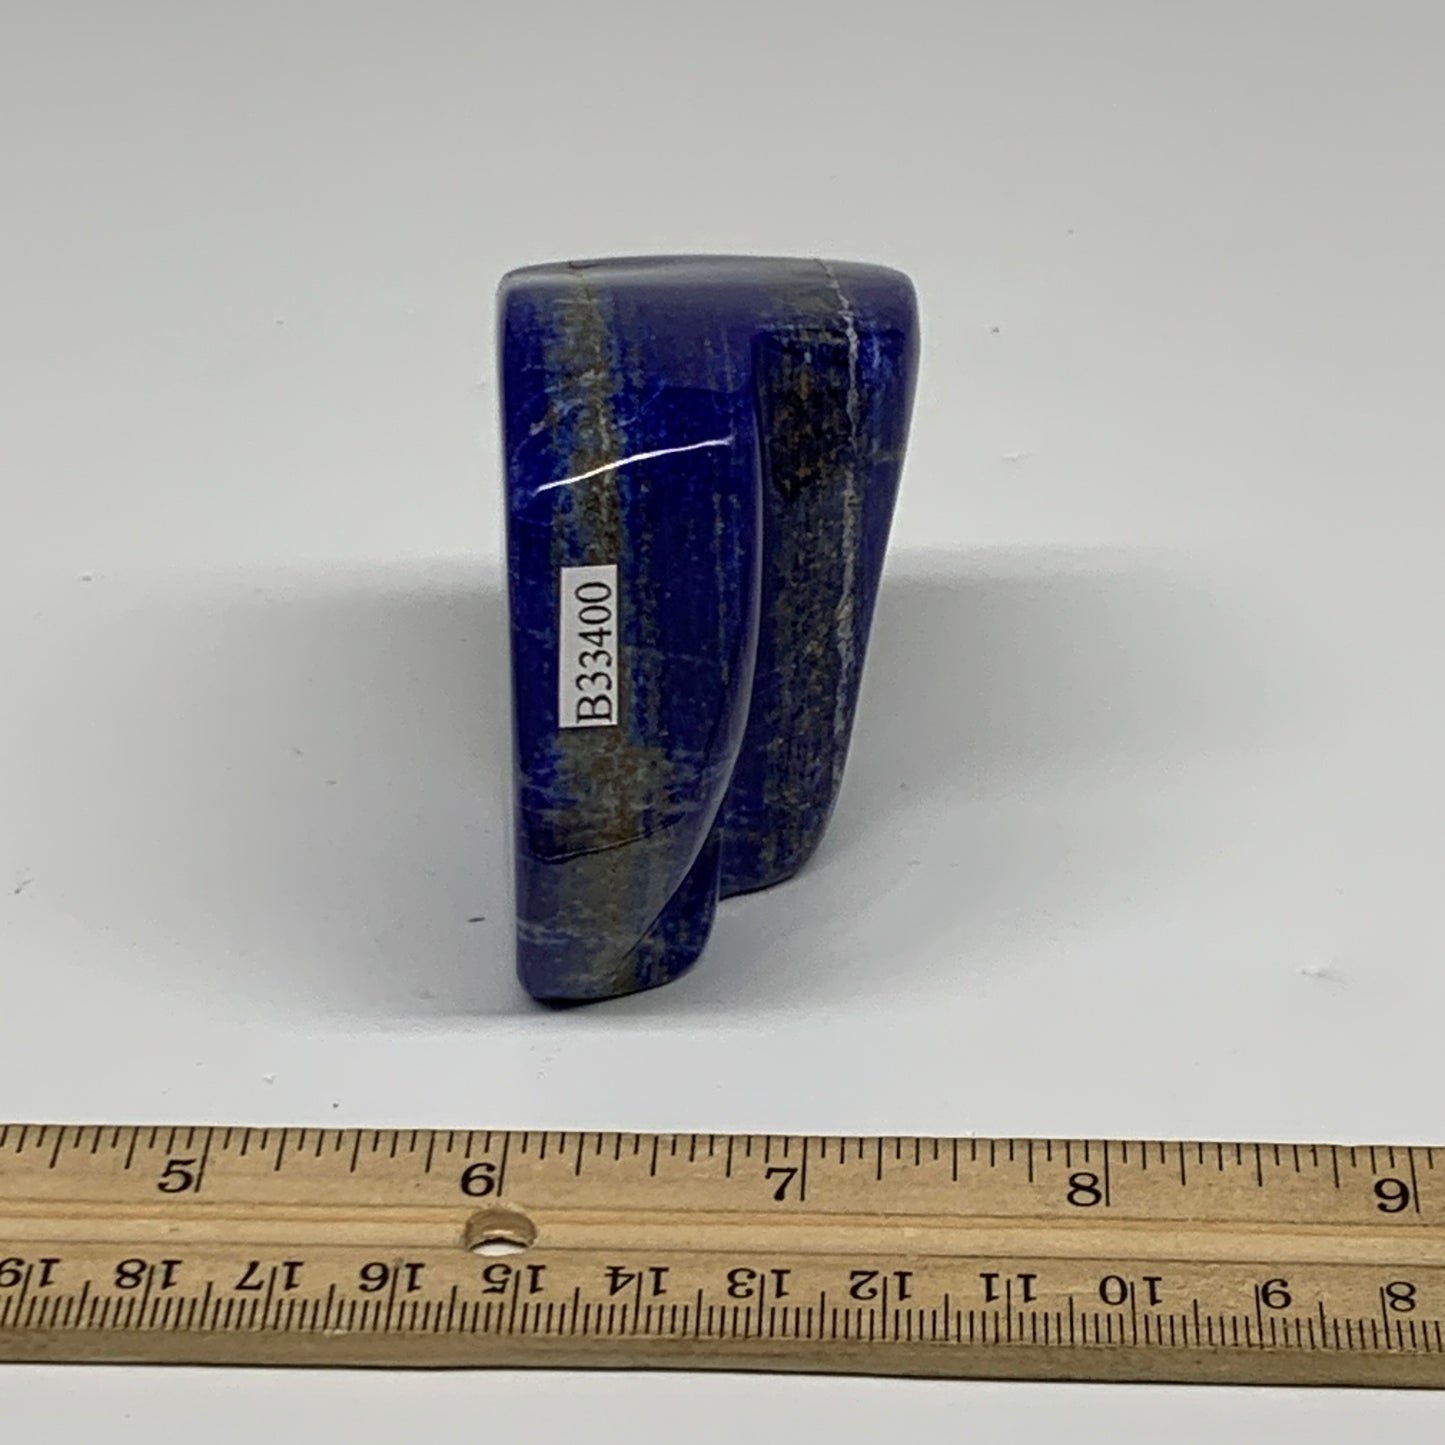 0.57 lbs, 2.5"x2.3"x1.5", Natural Freeform Lapis Lazuli from Afghanistan, B33400